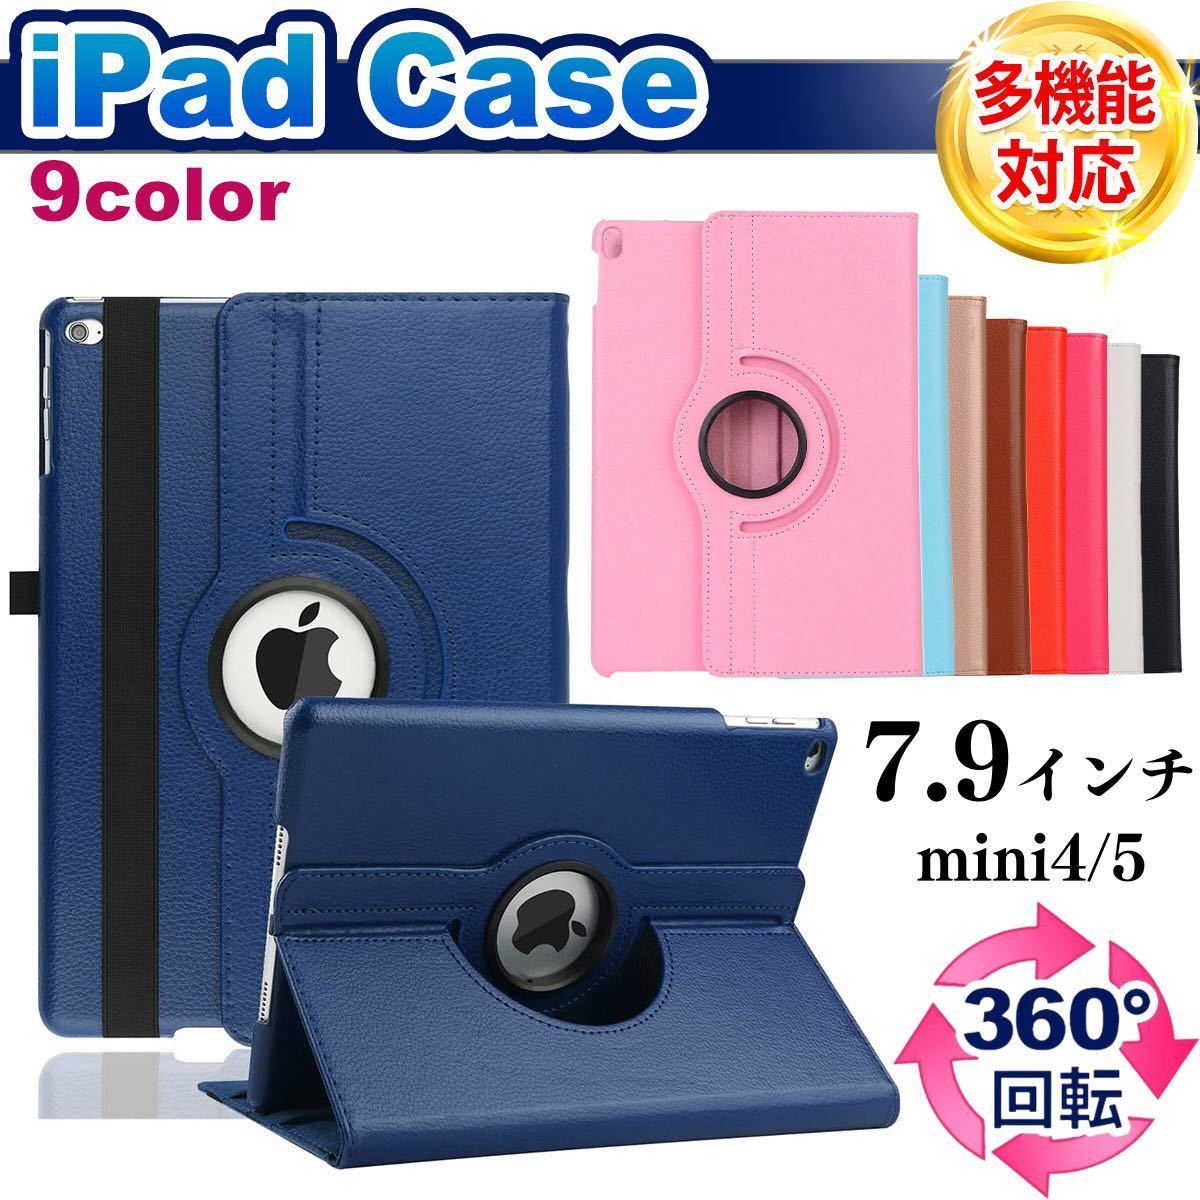 iPad ケース 7.9インチ mini4 mini5 手帳型 カバー アイパッド 耐衝撃 強い 子供用 アイパッドケースの画像1